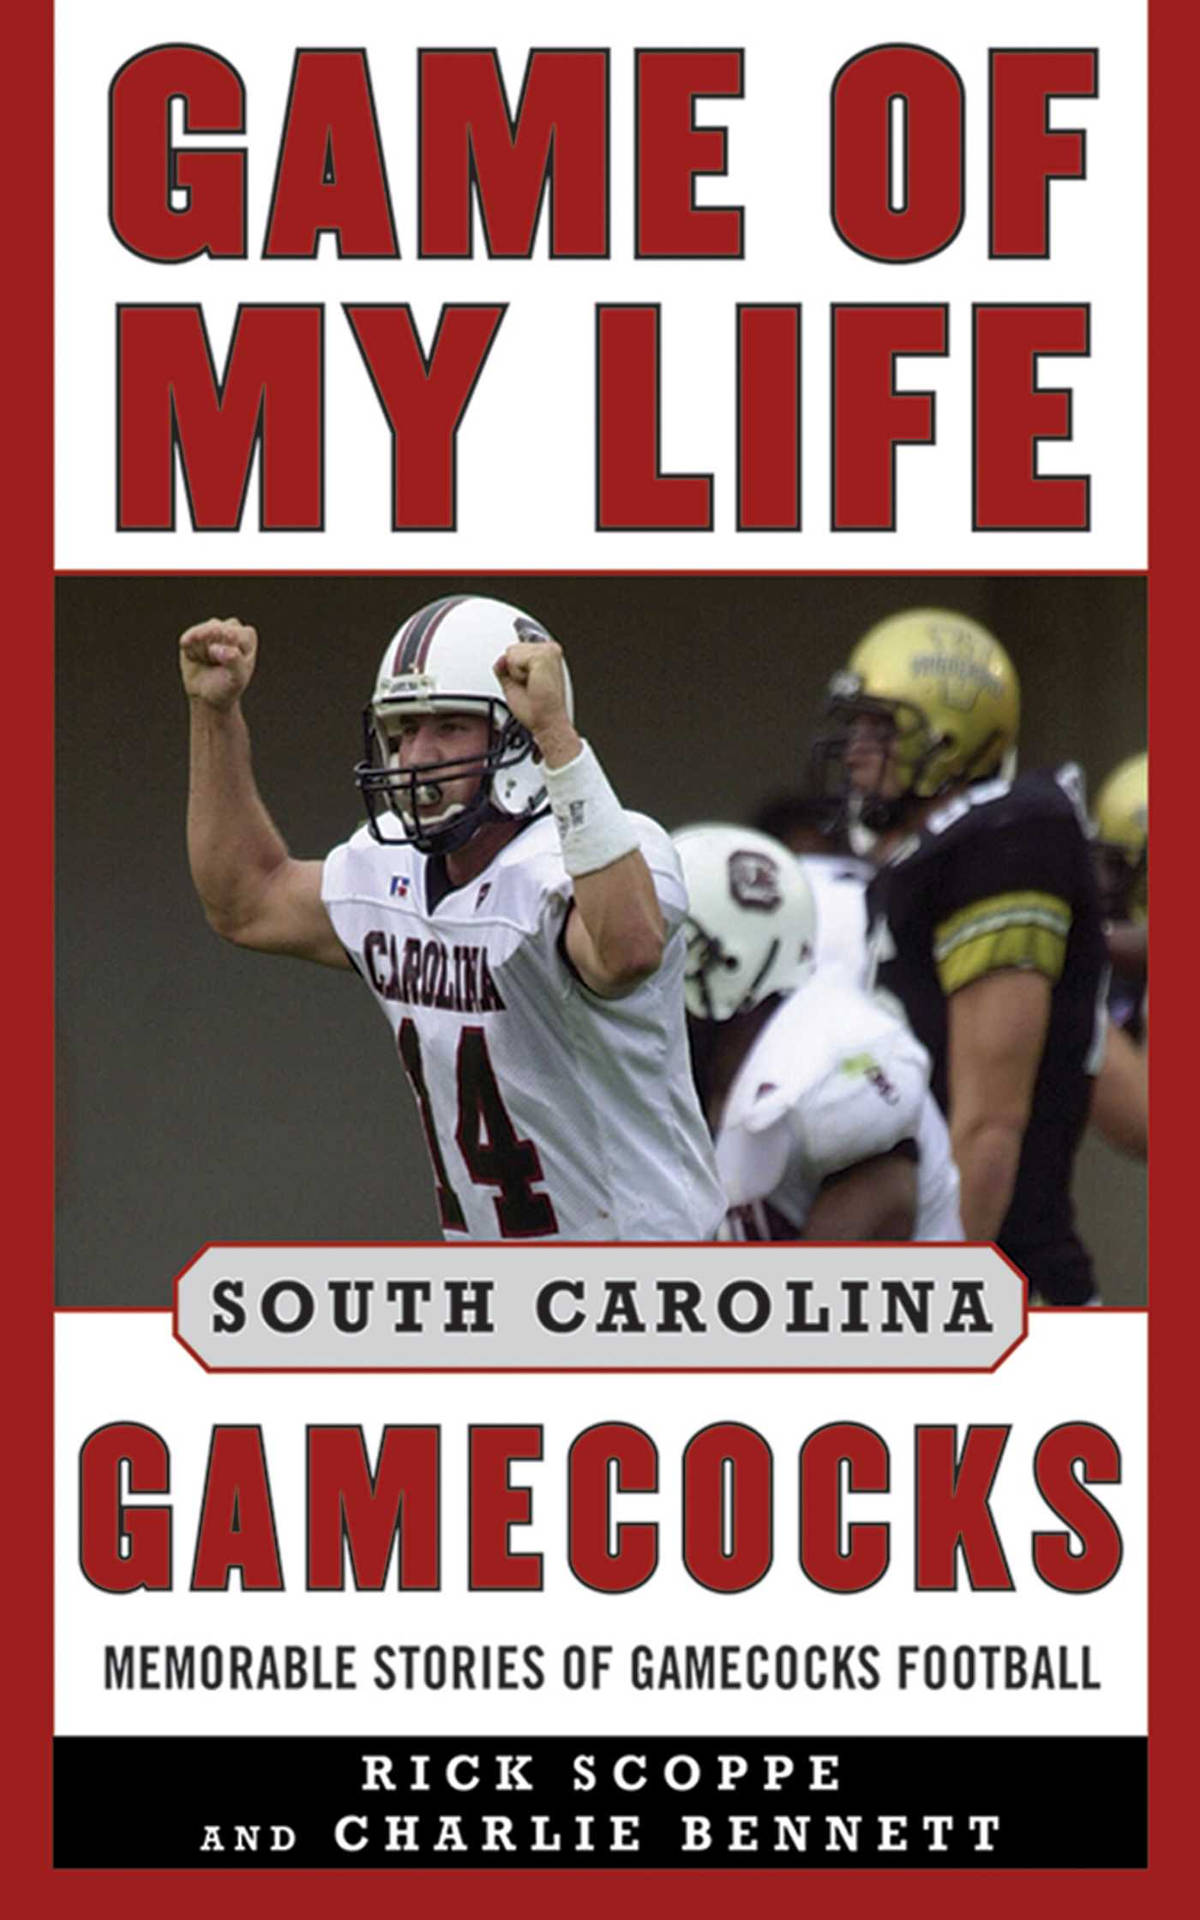 South Carolina Gamecocks Book Cover Stories Wallpaper